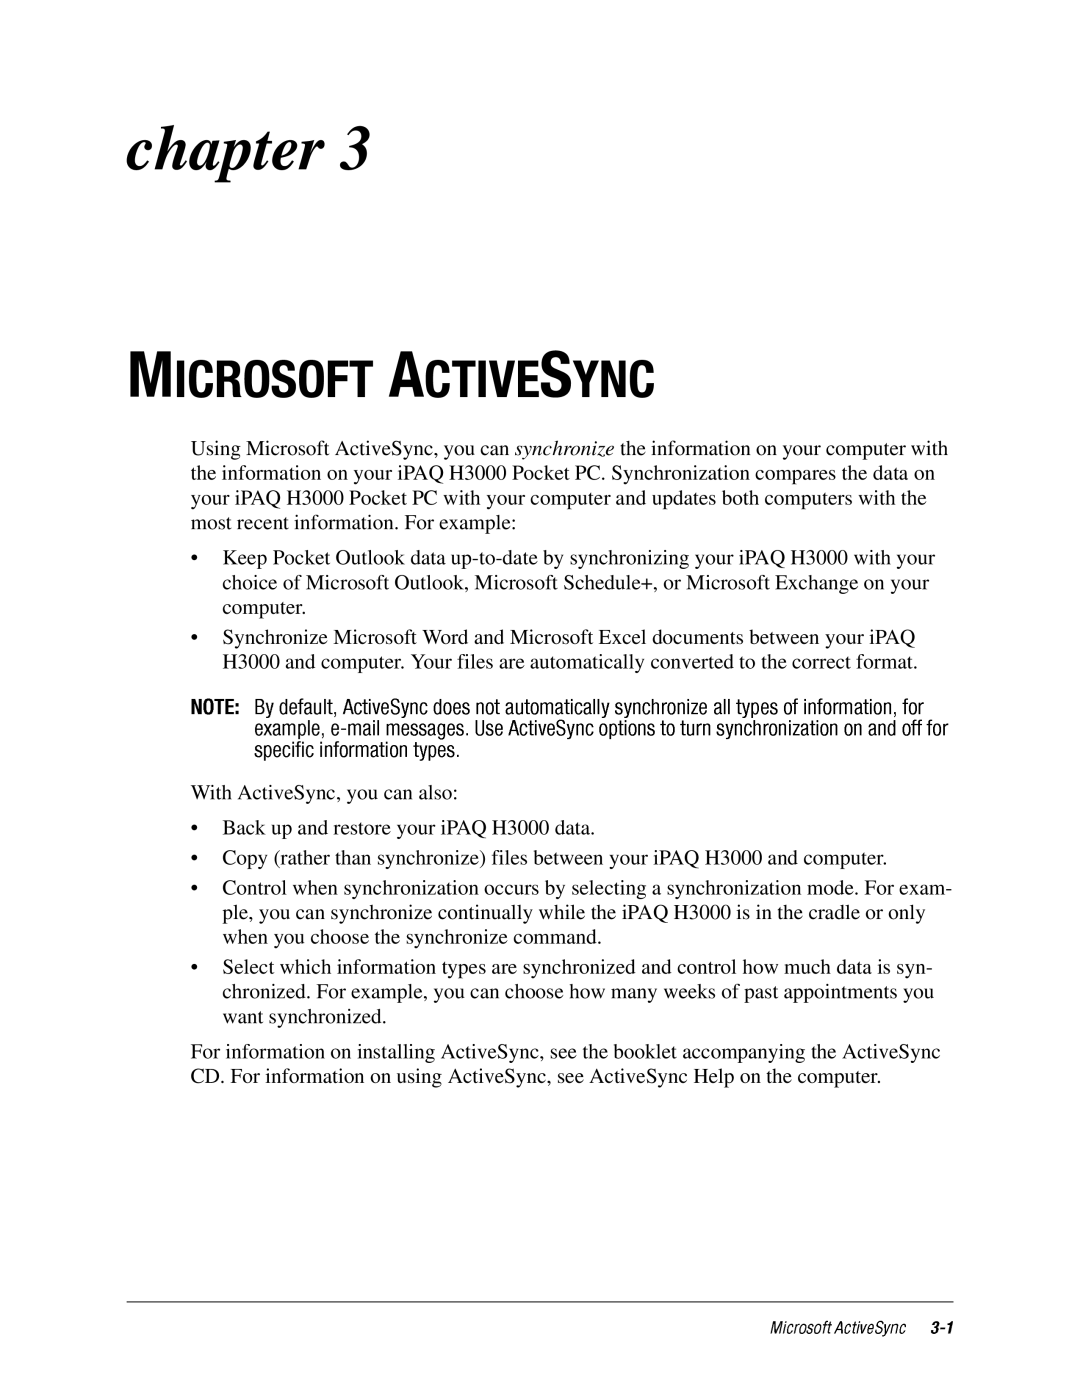 DeWalt IPAQ H3000 manual Microsoft Activesync 